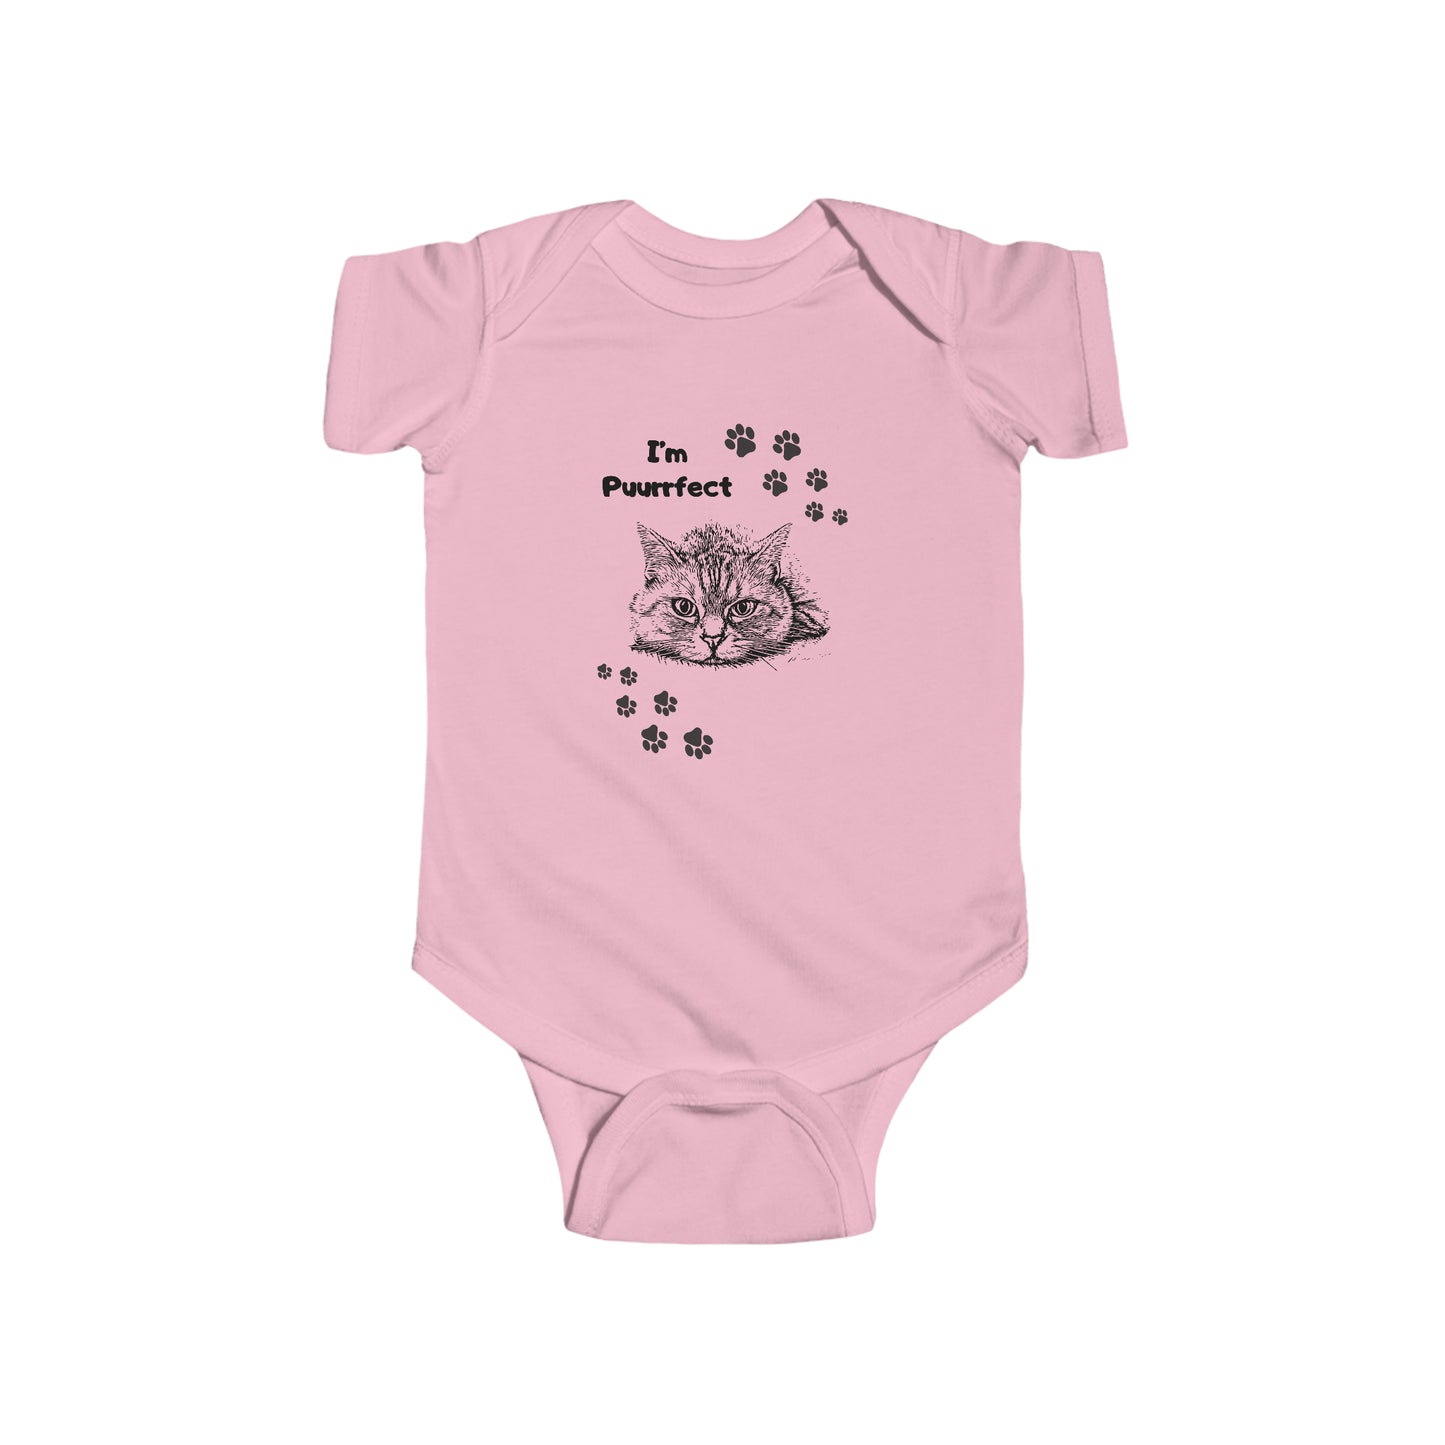 "Cat-Lady Grandma" Baby Bodysuit, "I'm Puurrfect" Design, Cat Lover Mom Grandma Gift, 4 Colors